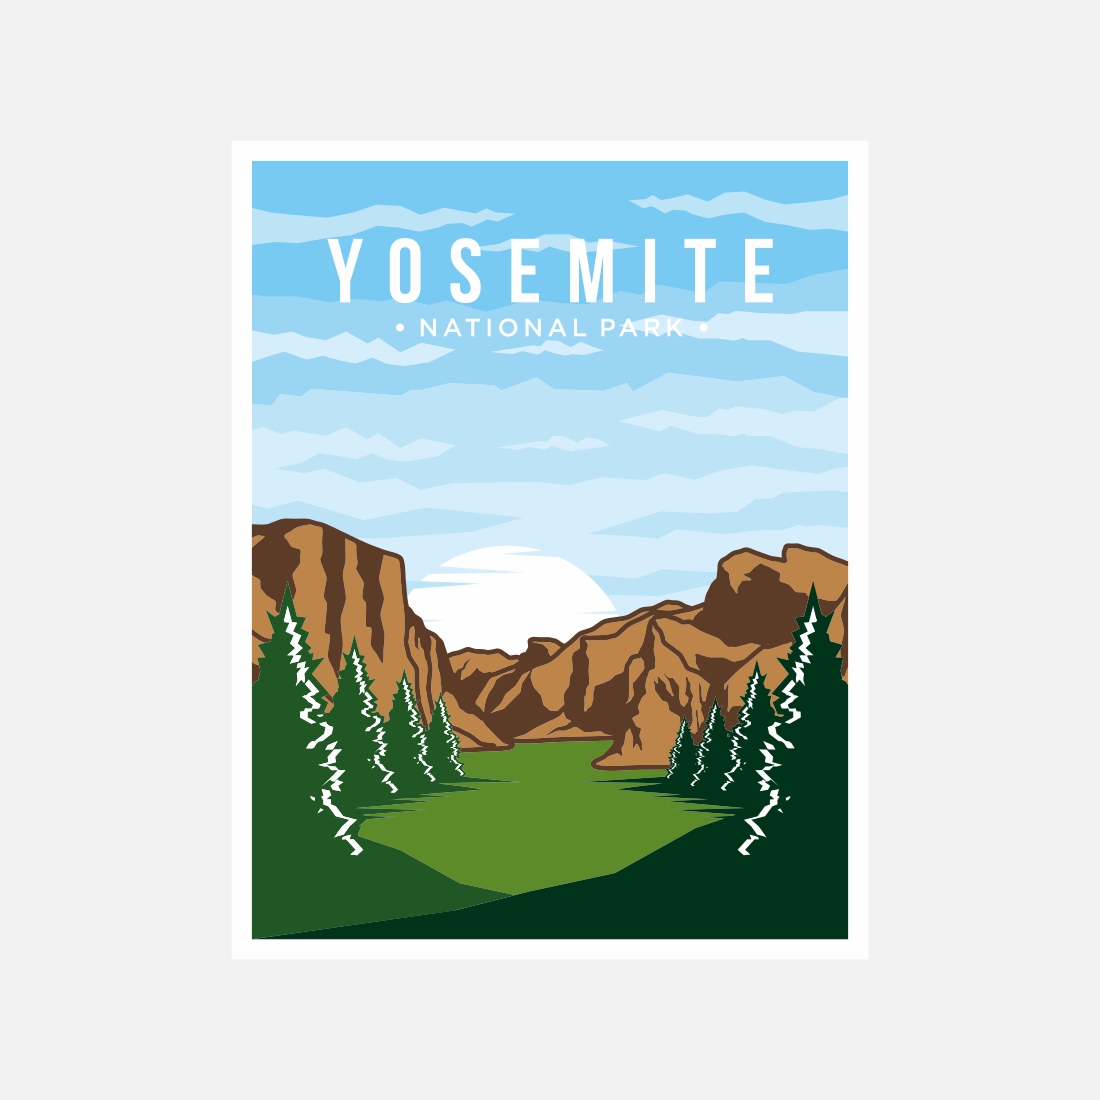 Yosemite National Park poster vector illustration design – Only $8 preview image.